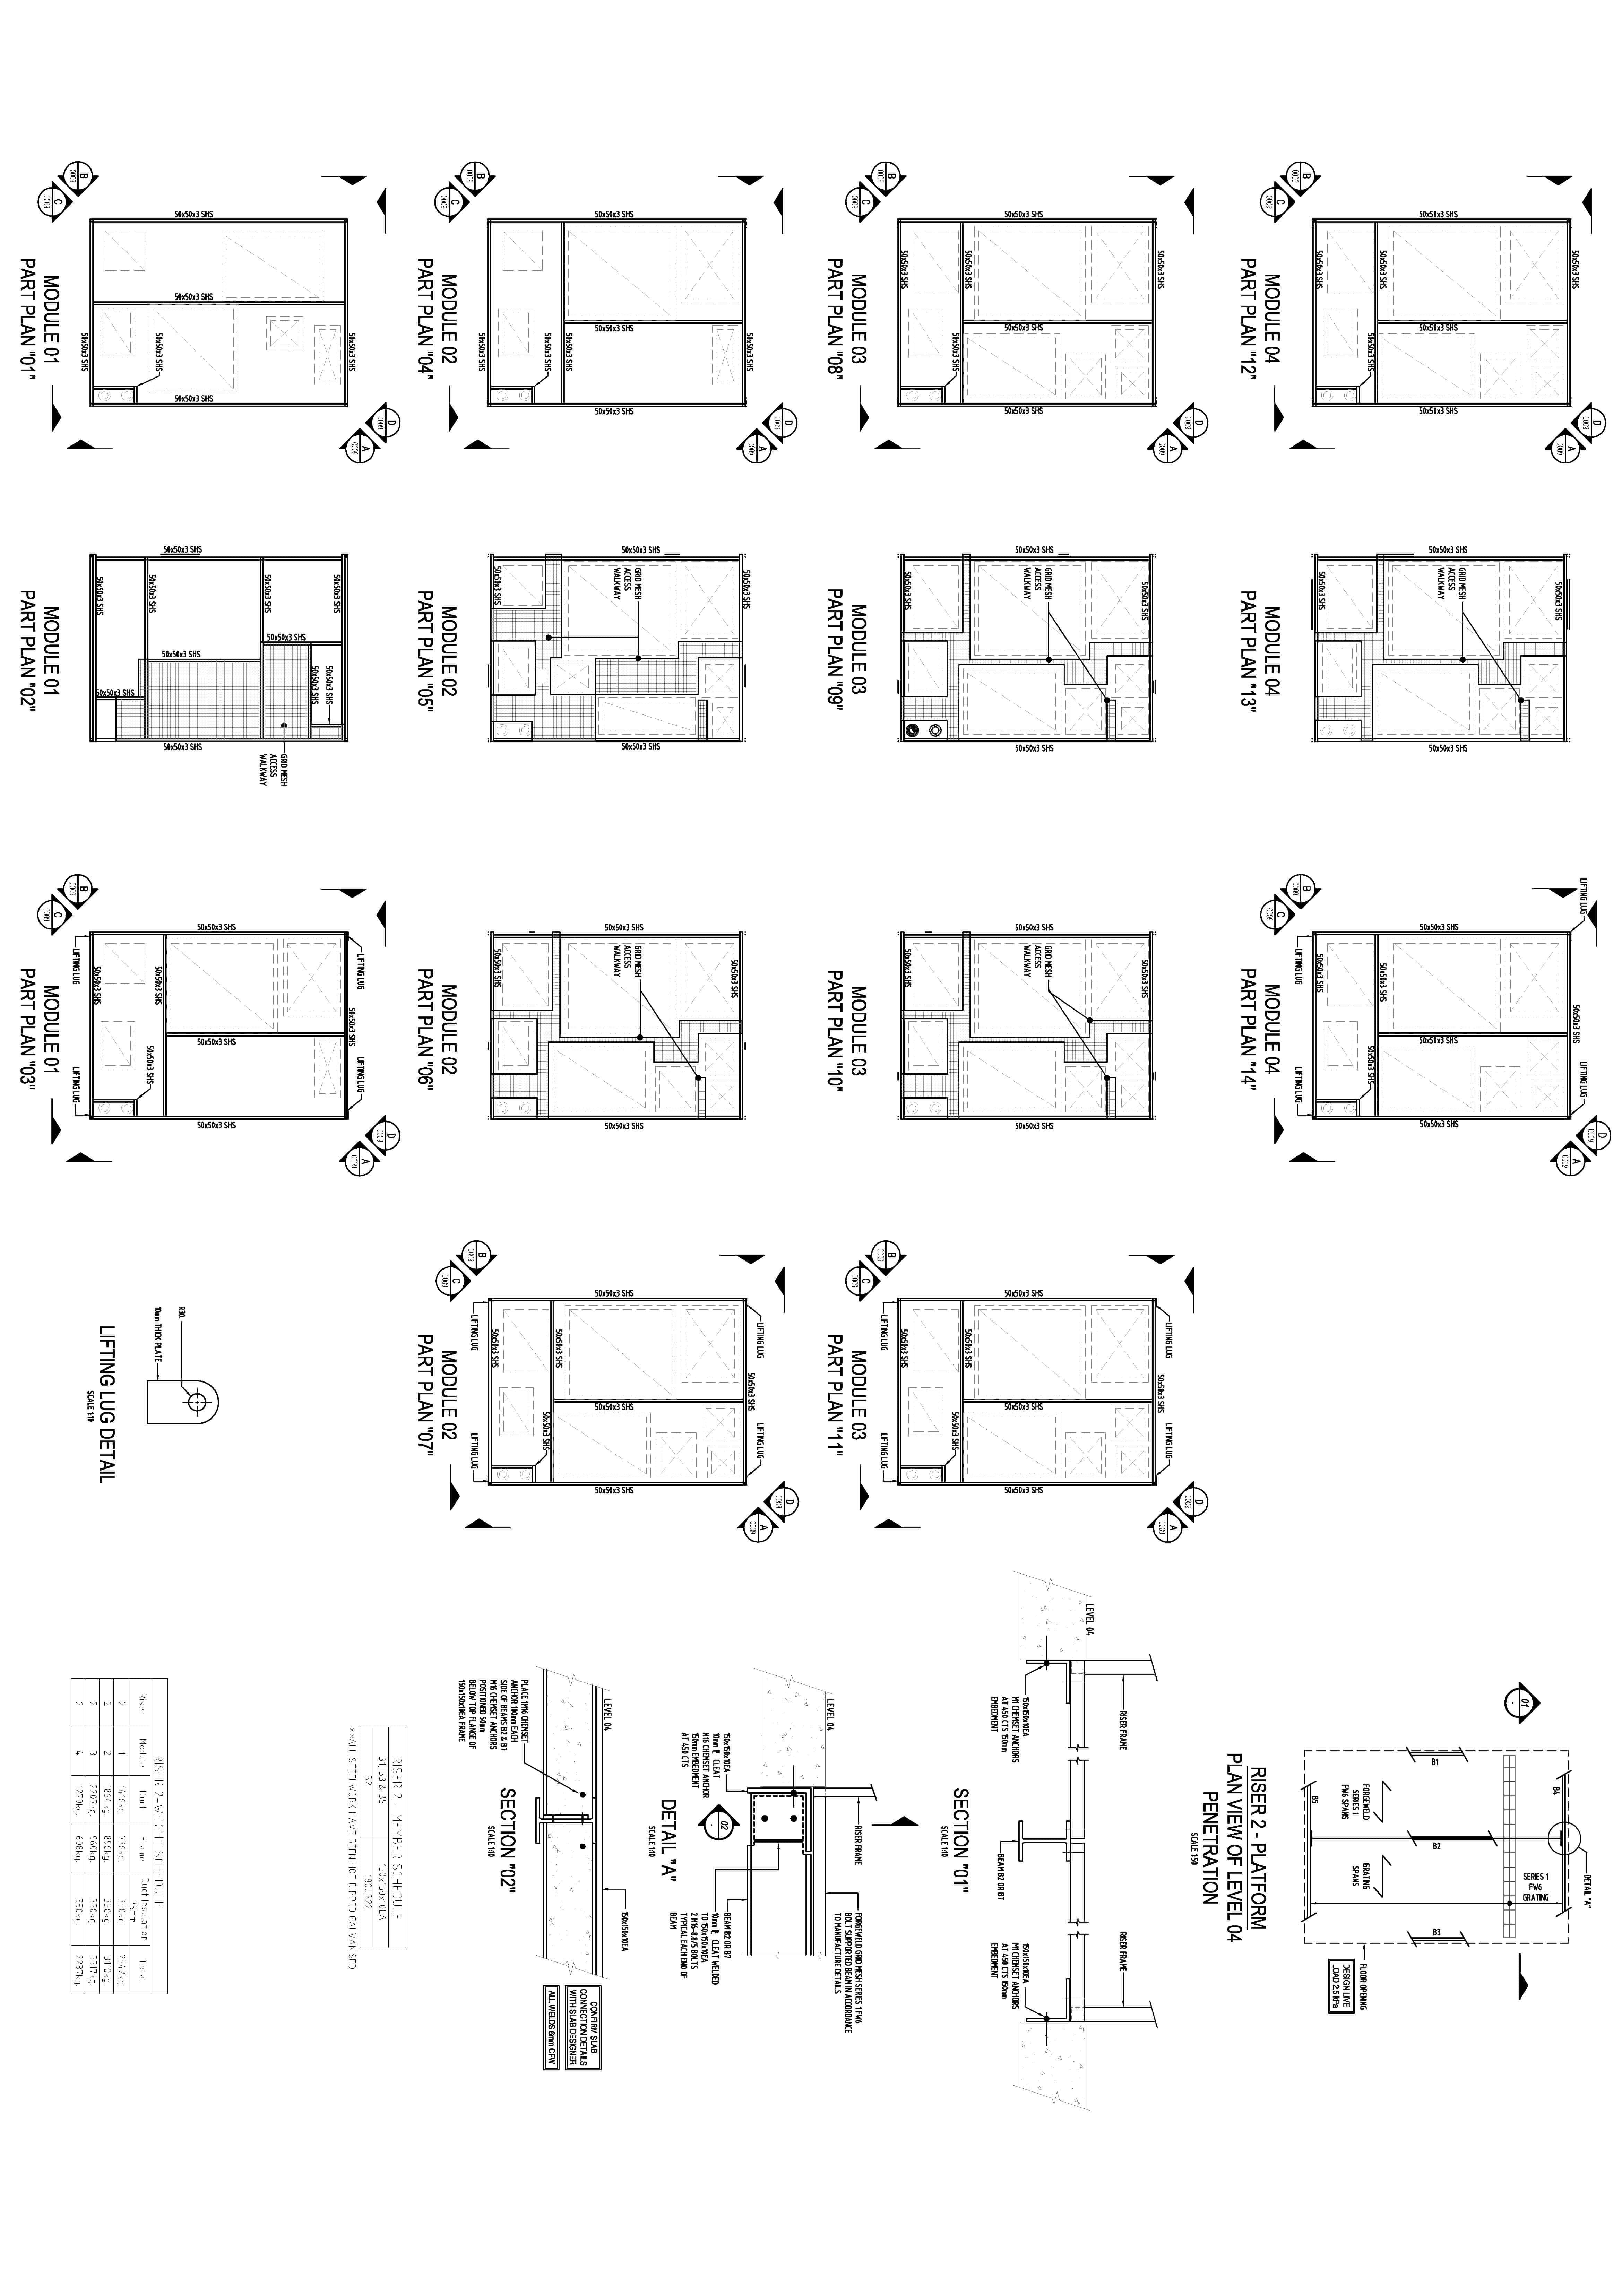 fabrication-details-workshop-drawings